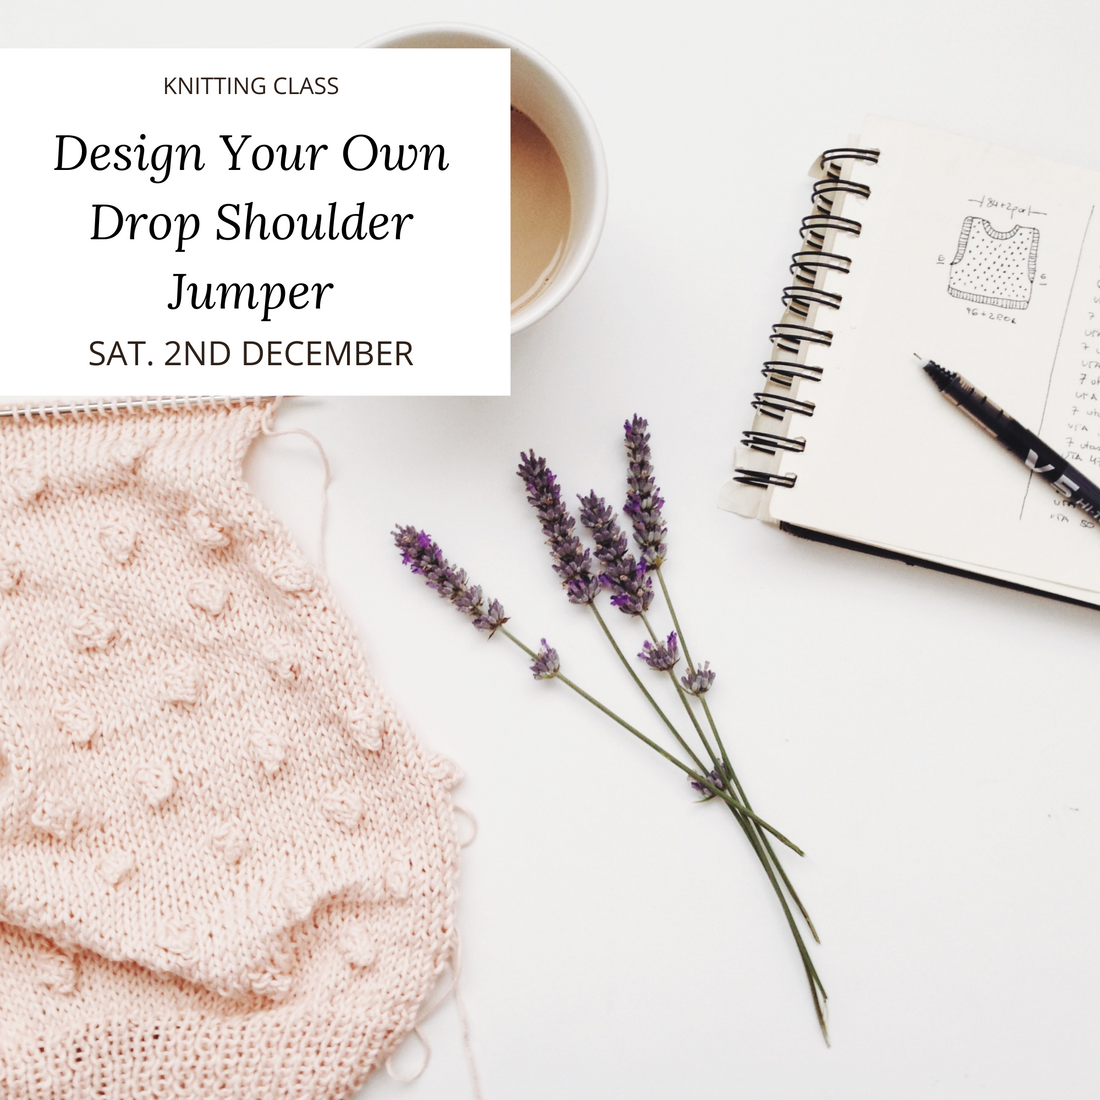 Design Your Own Drop Shoulder Jumper Knitting Class with Vera Marcu